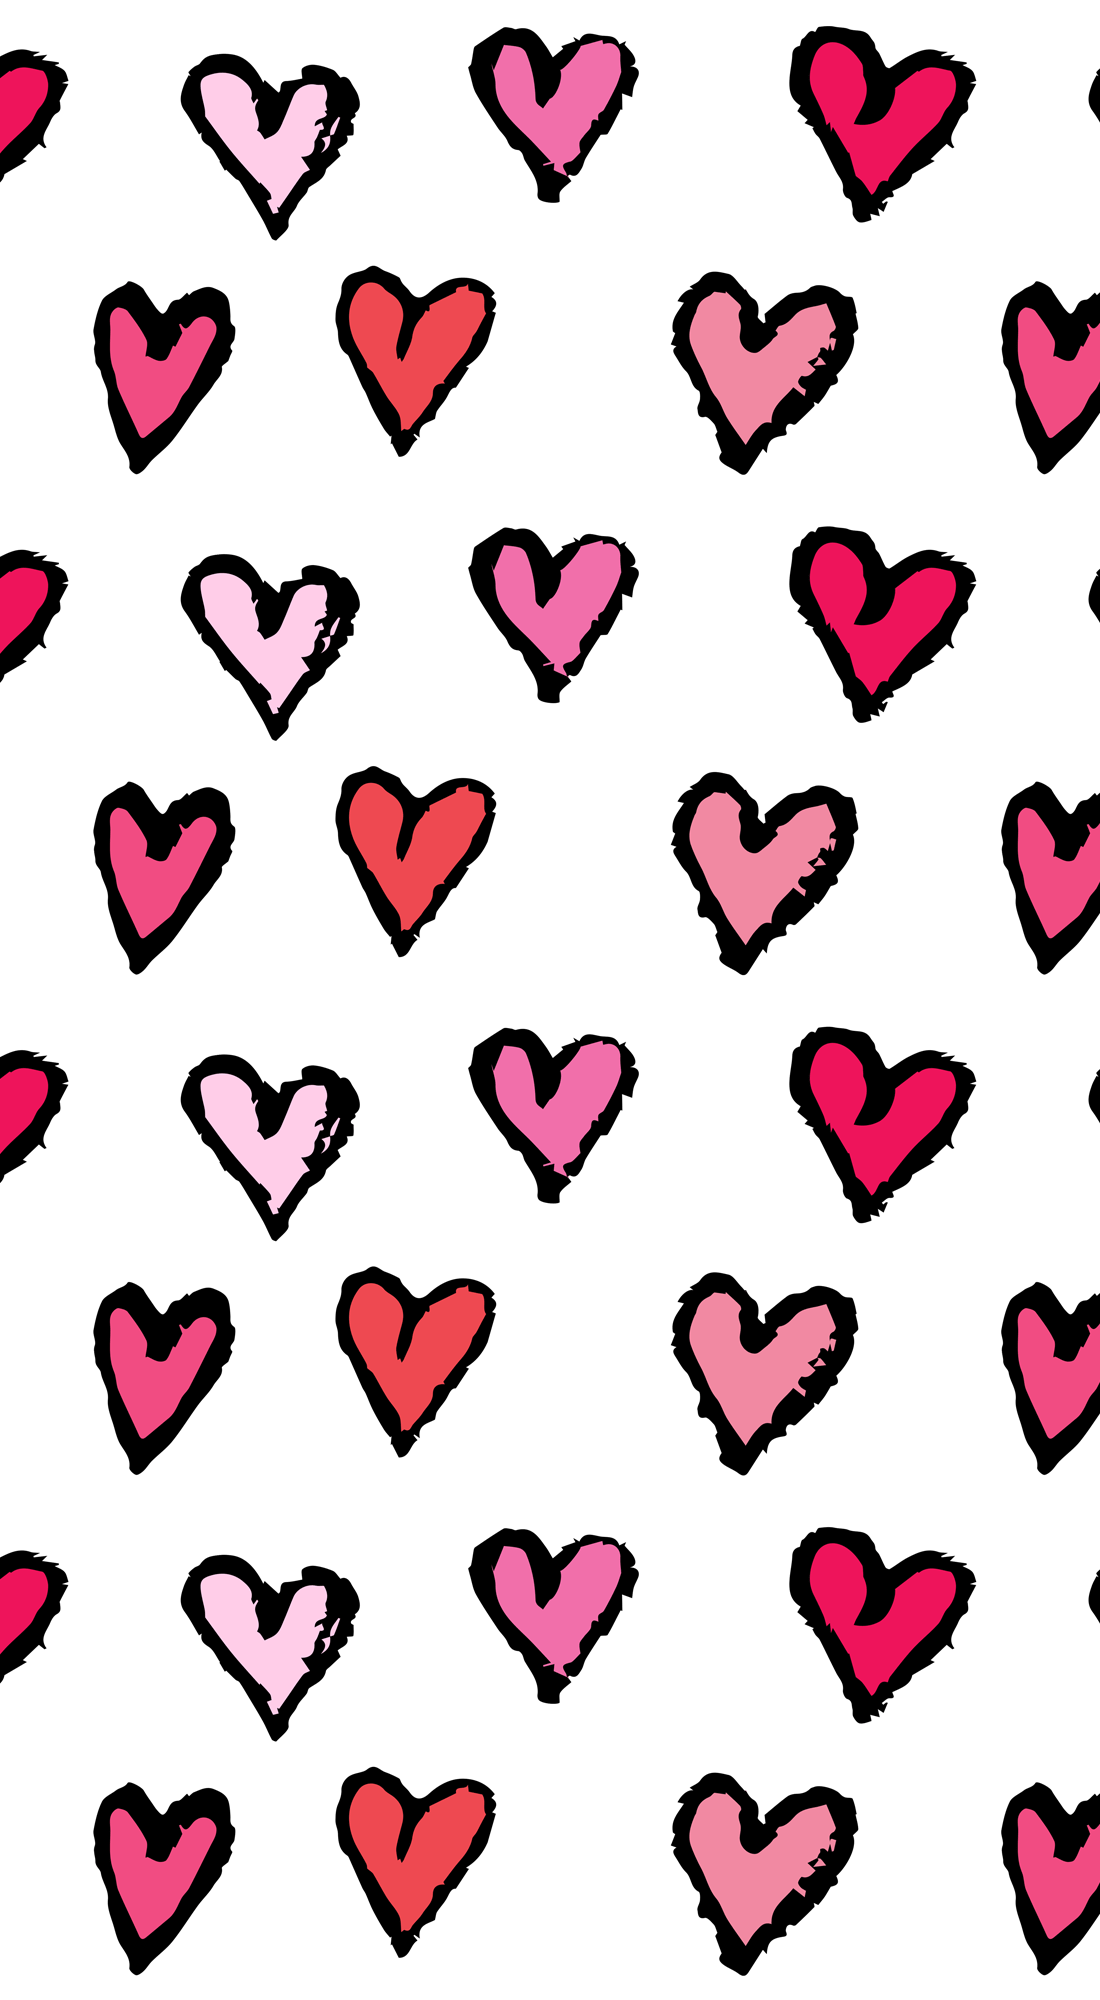 Cute Heart iPhone Wallpapers - Top Free Cute Heart iPhone ...